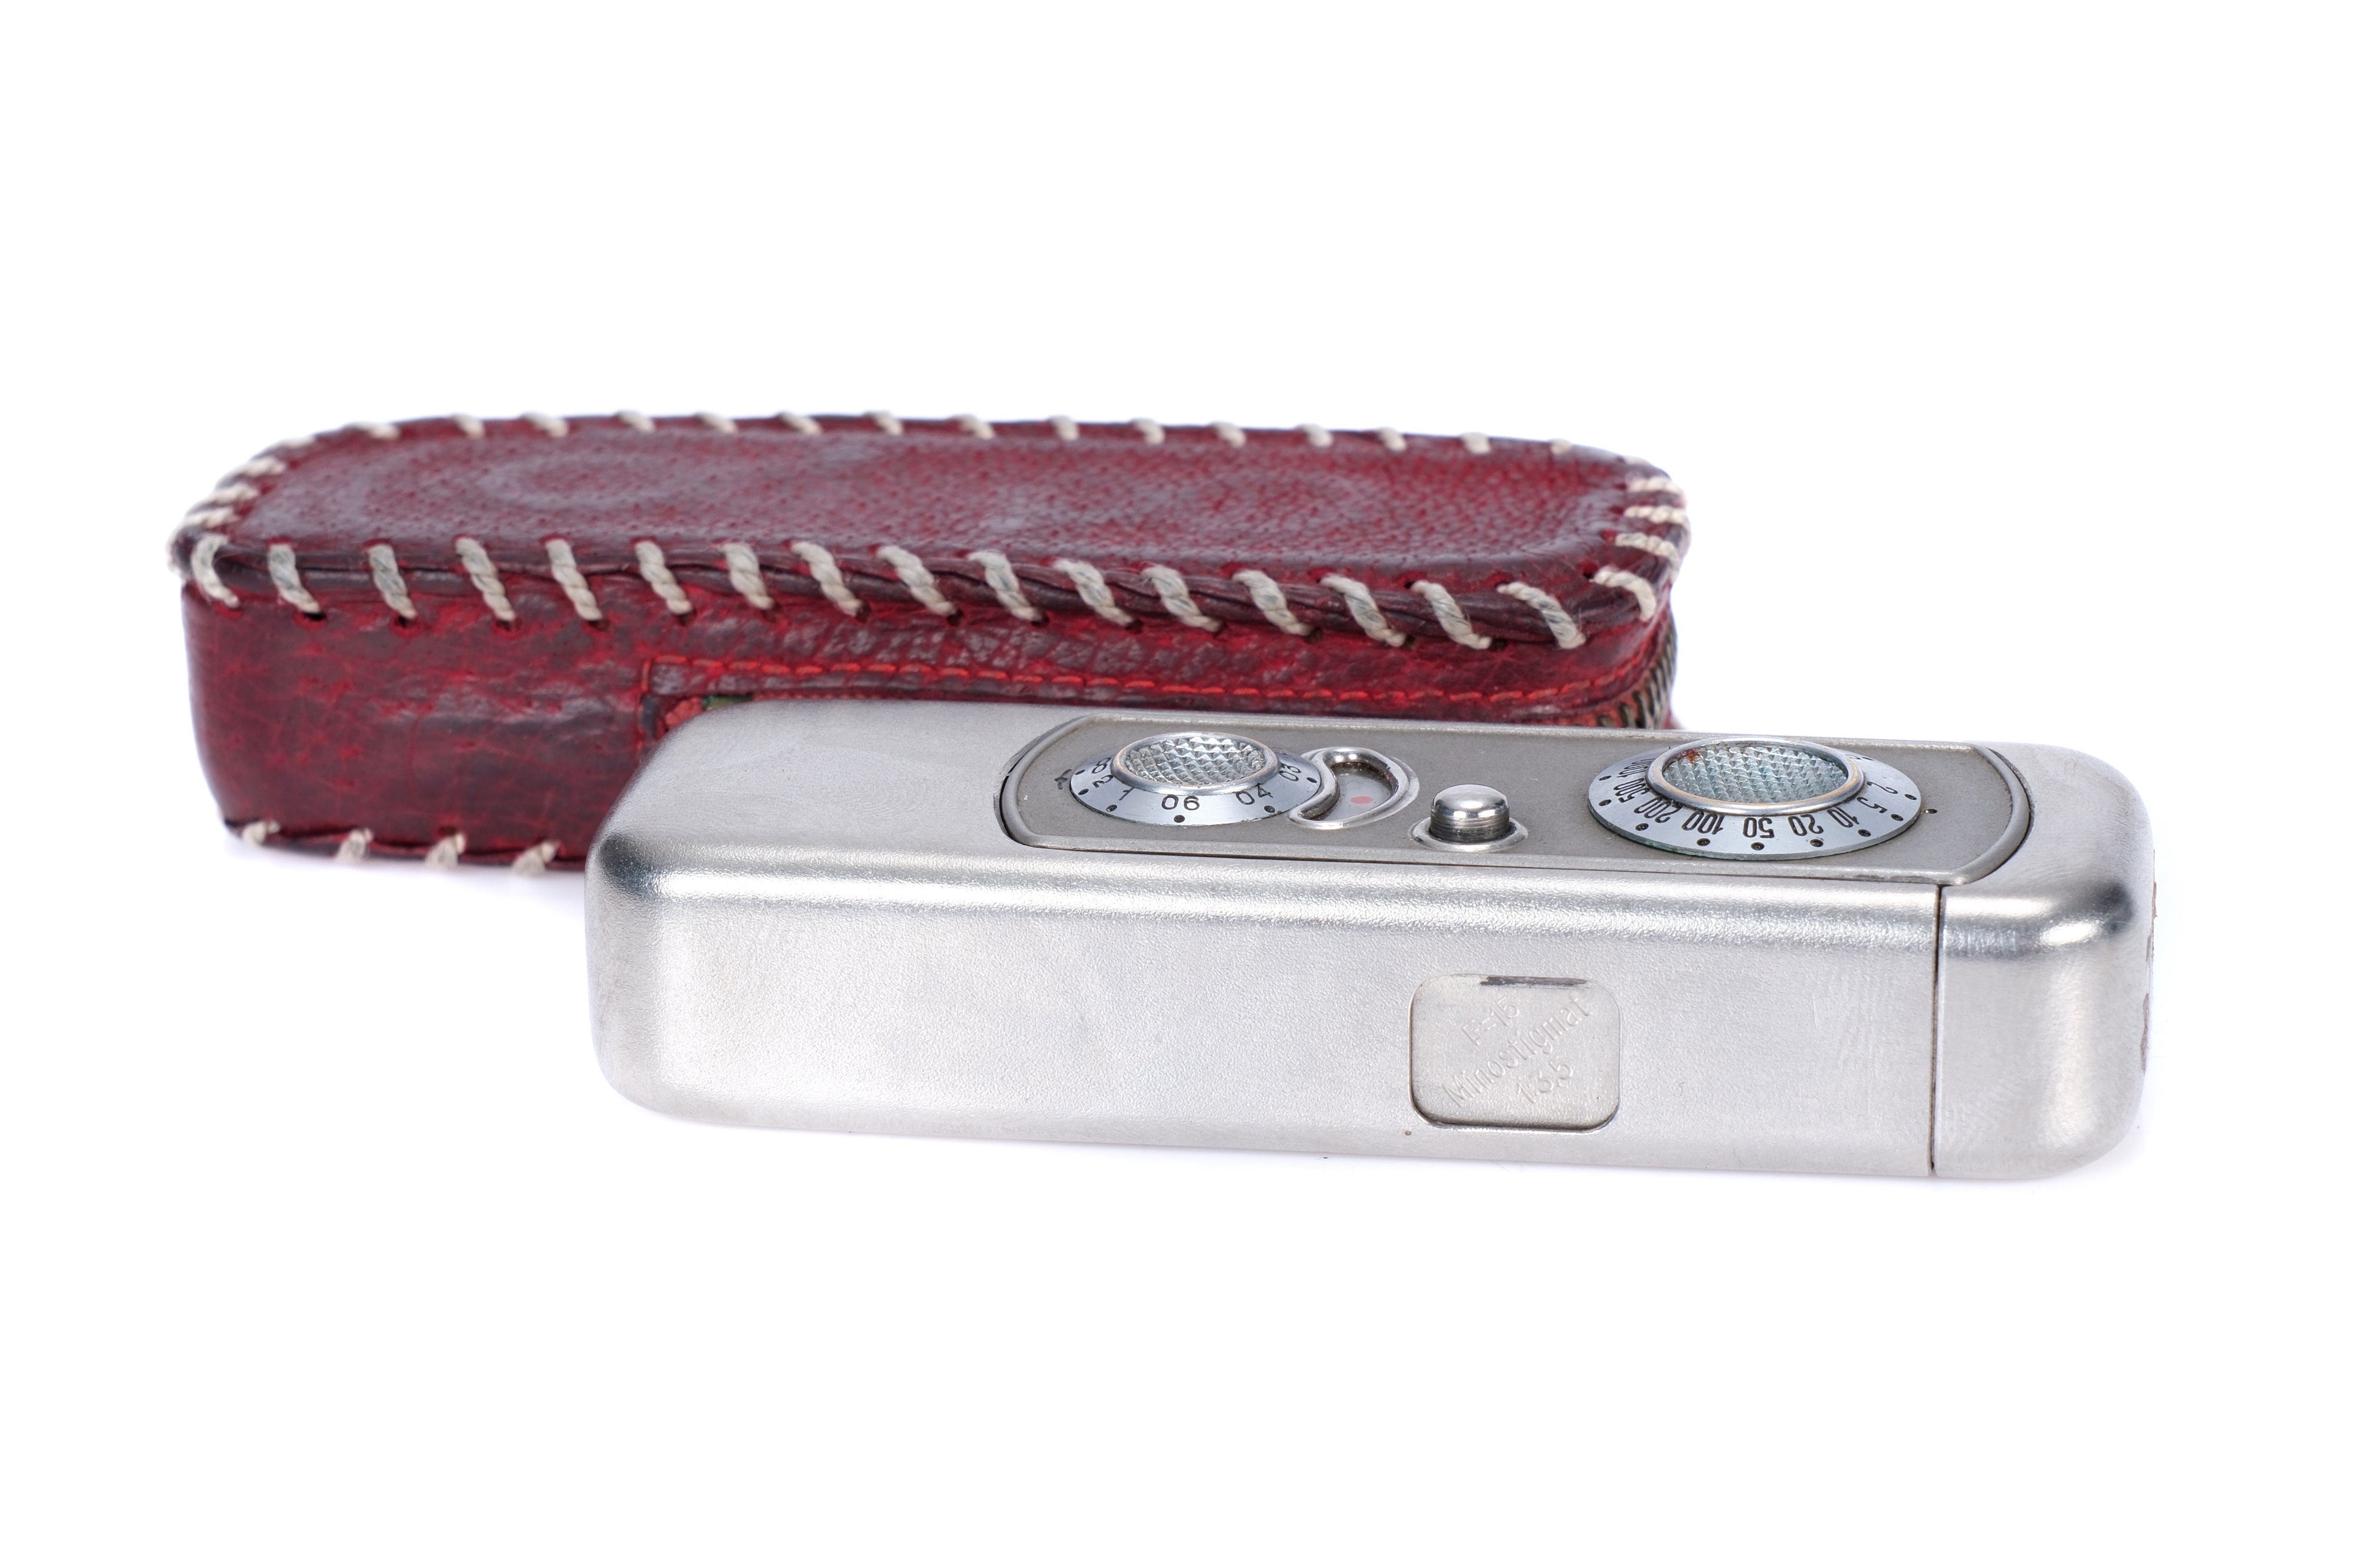 A Minox VEF Riga Sub-Miniature Camera - Image 6 of 6